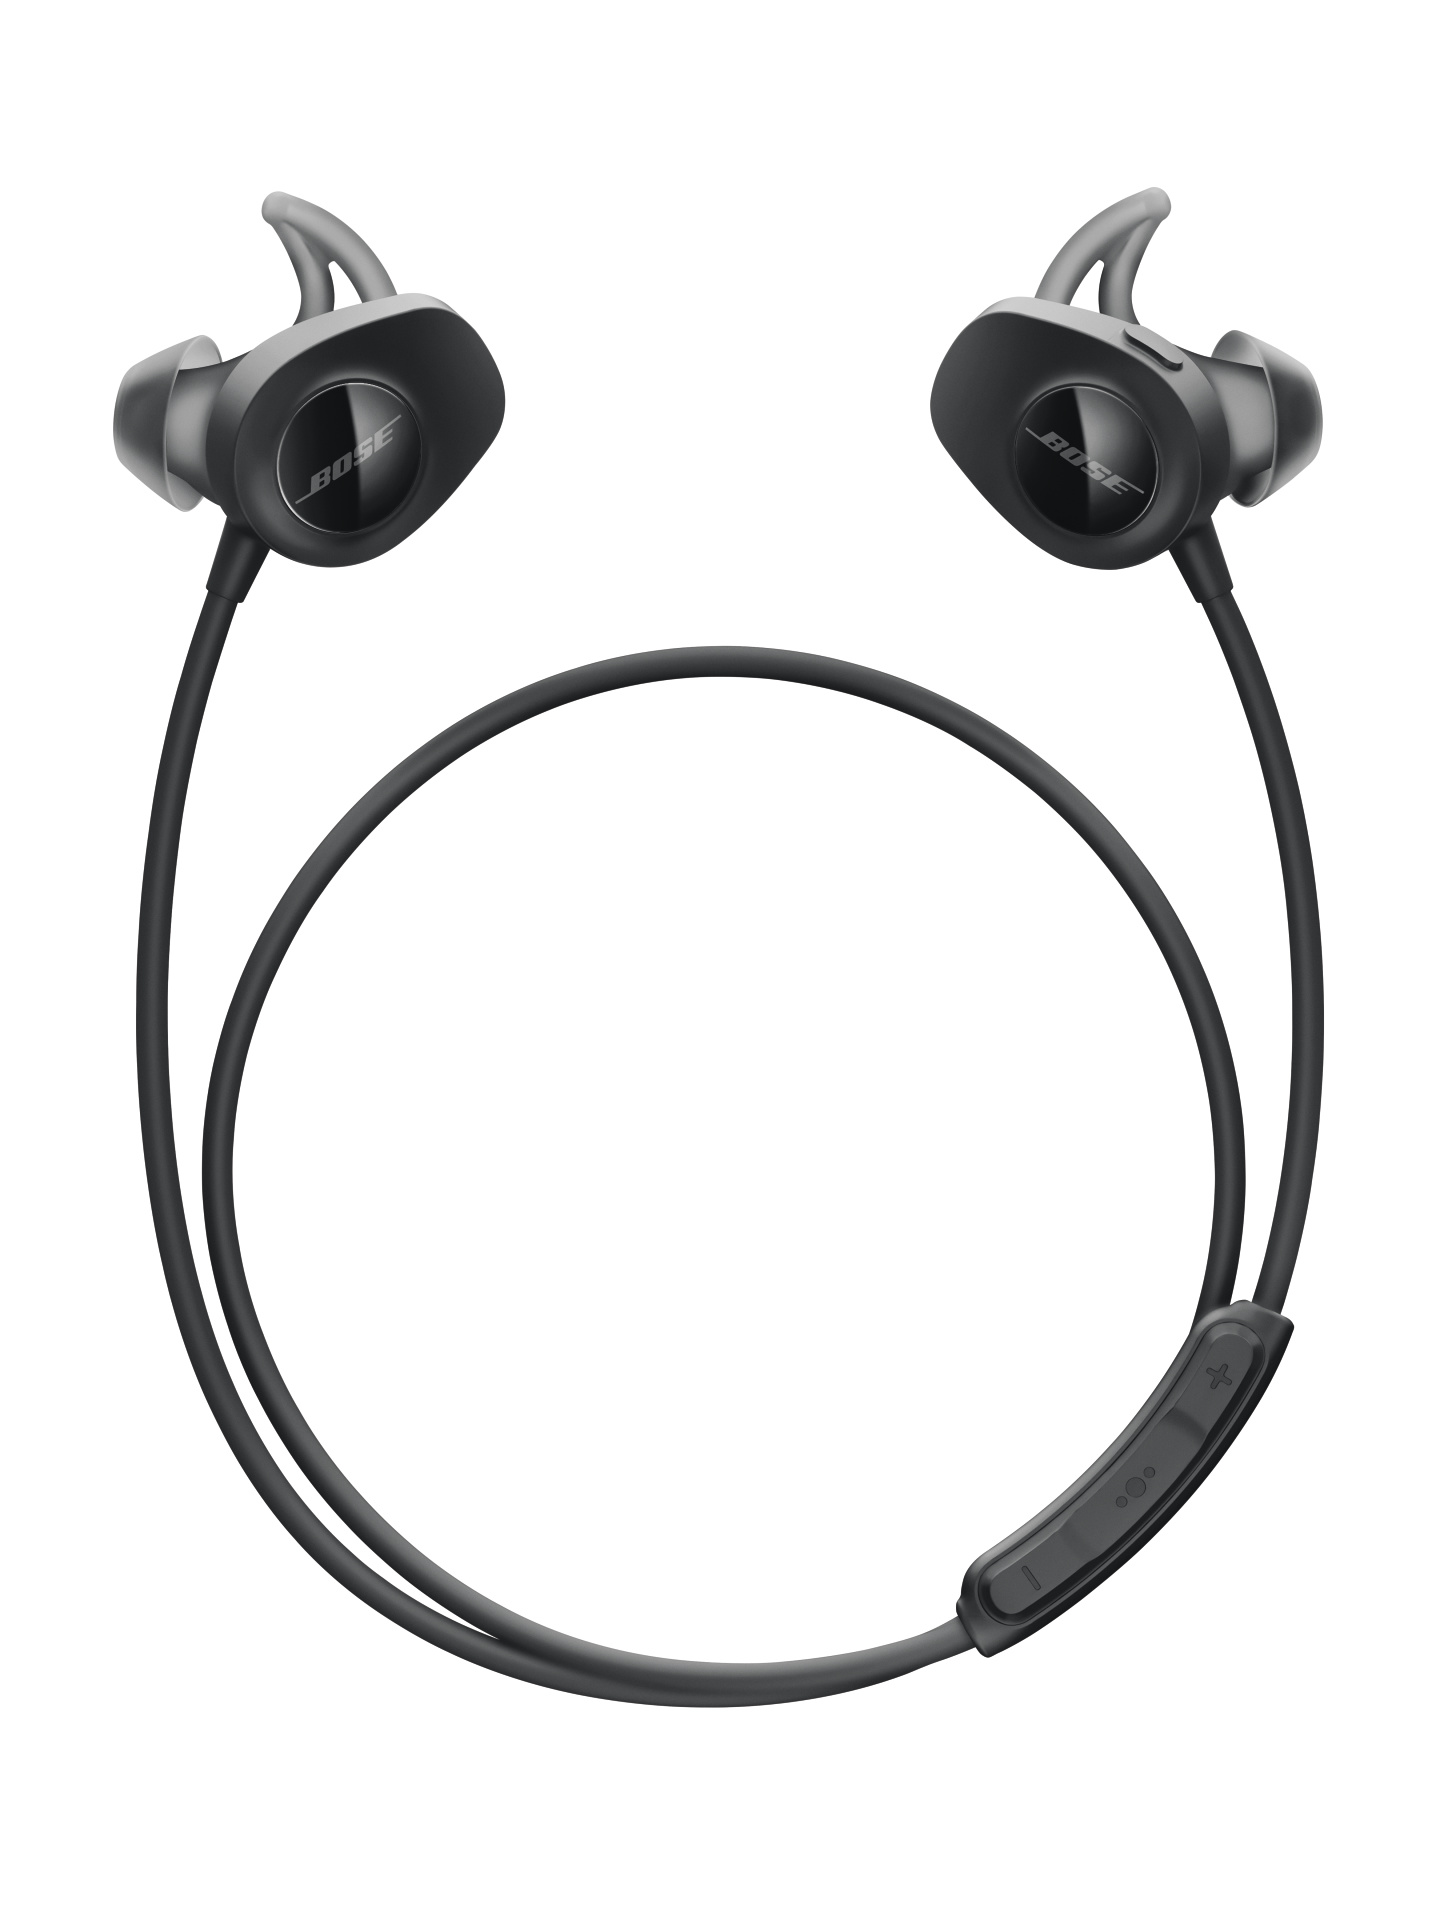 Bose SoundSport Wireless Sports Bluetooth Earbuds, Black - image 5 of 11